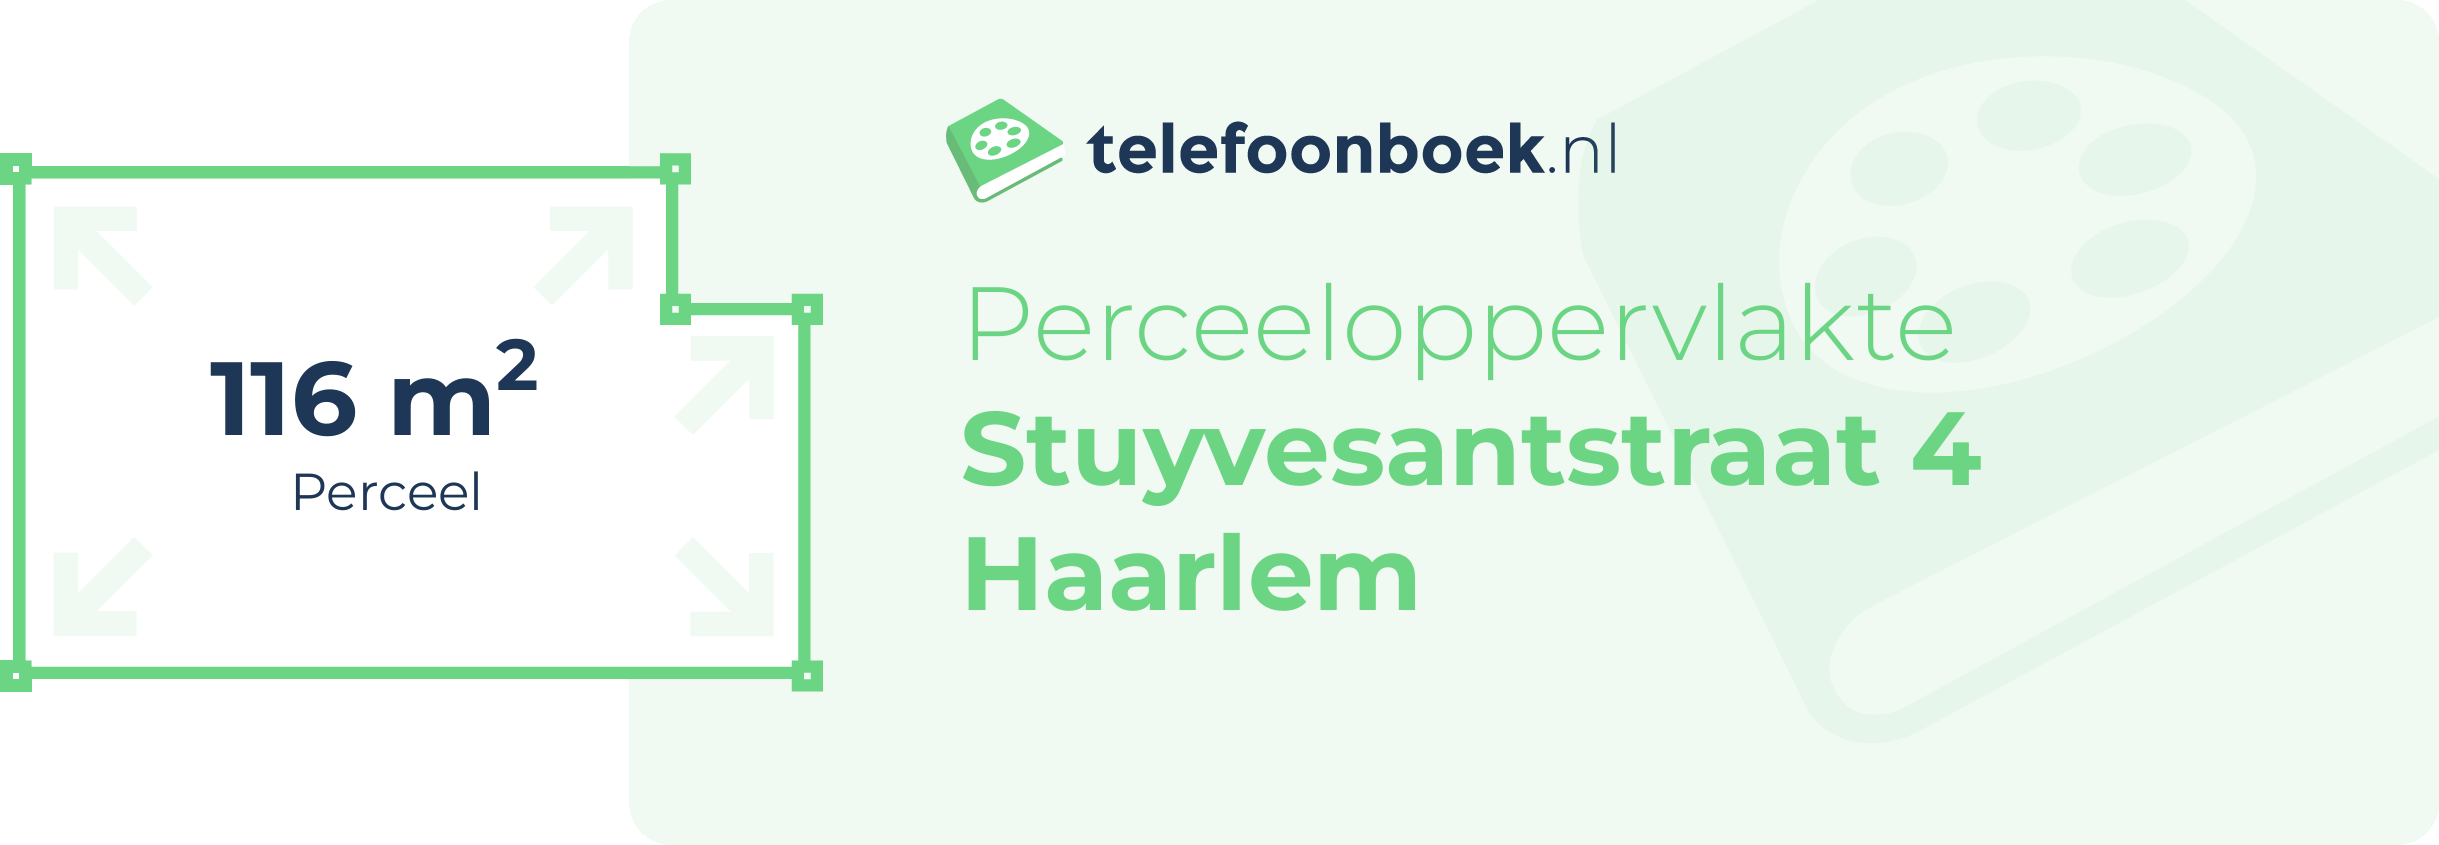 Perceeloppervlakte Stuyvesantstraat 4 Haarlem